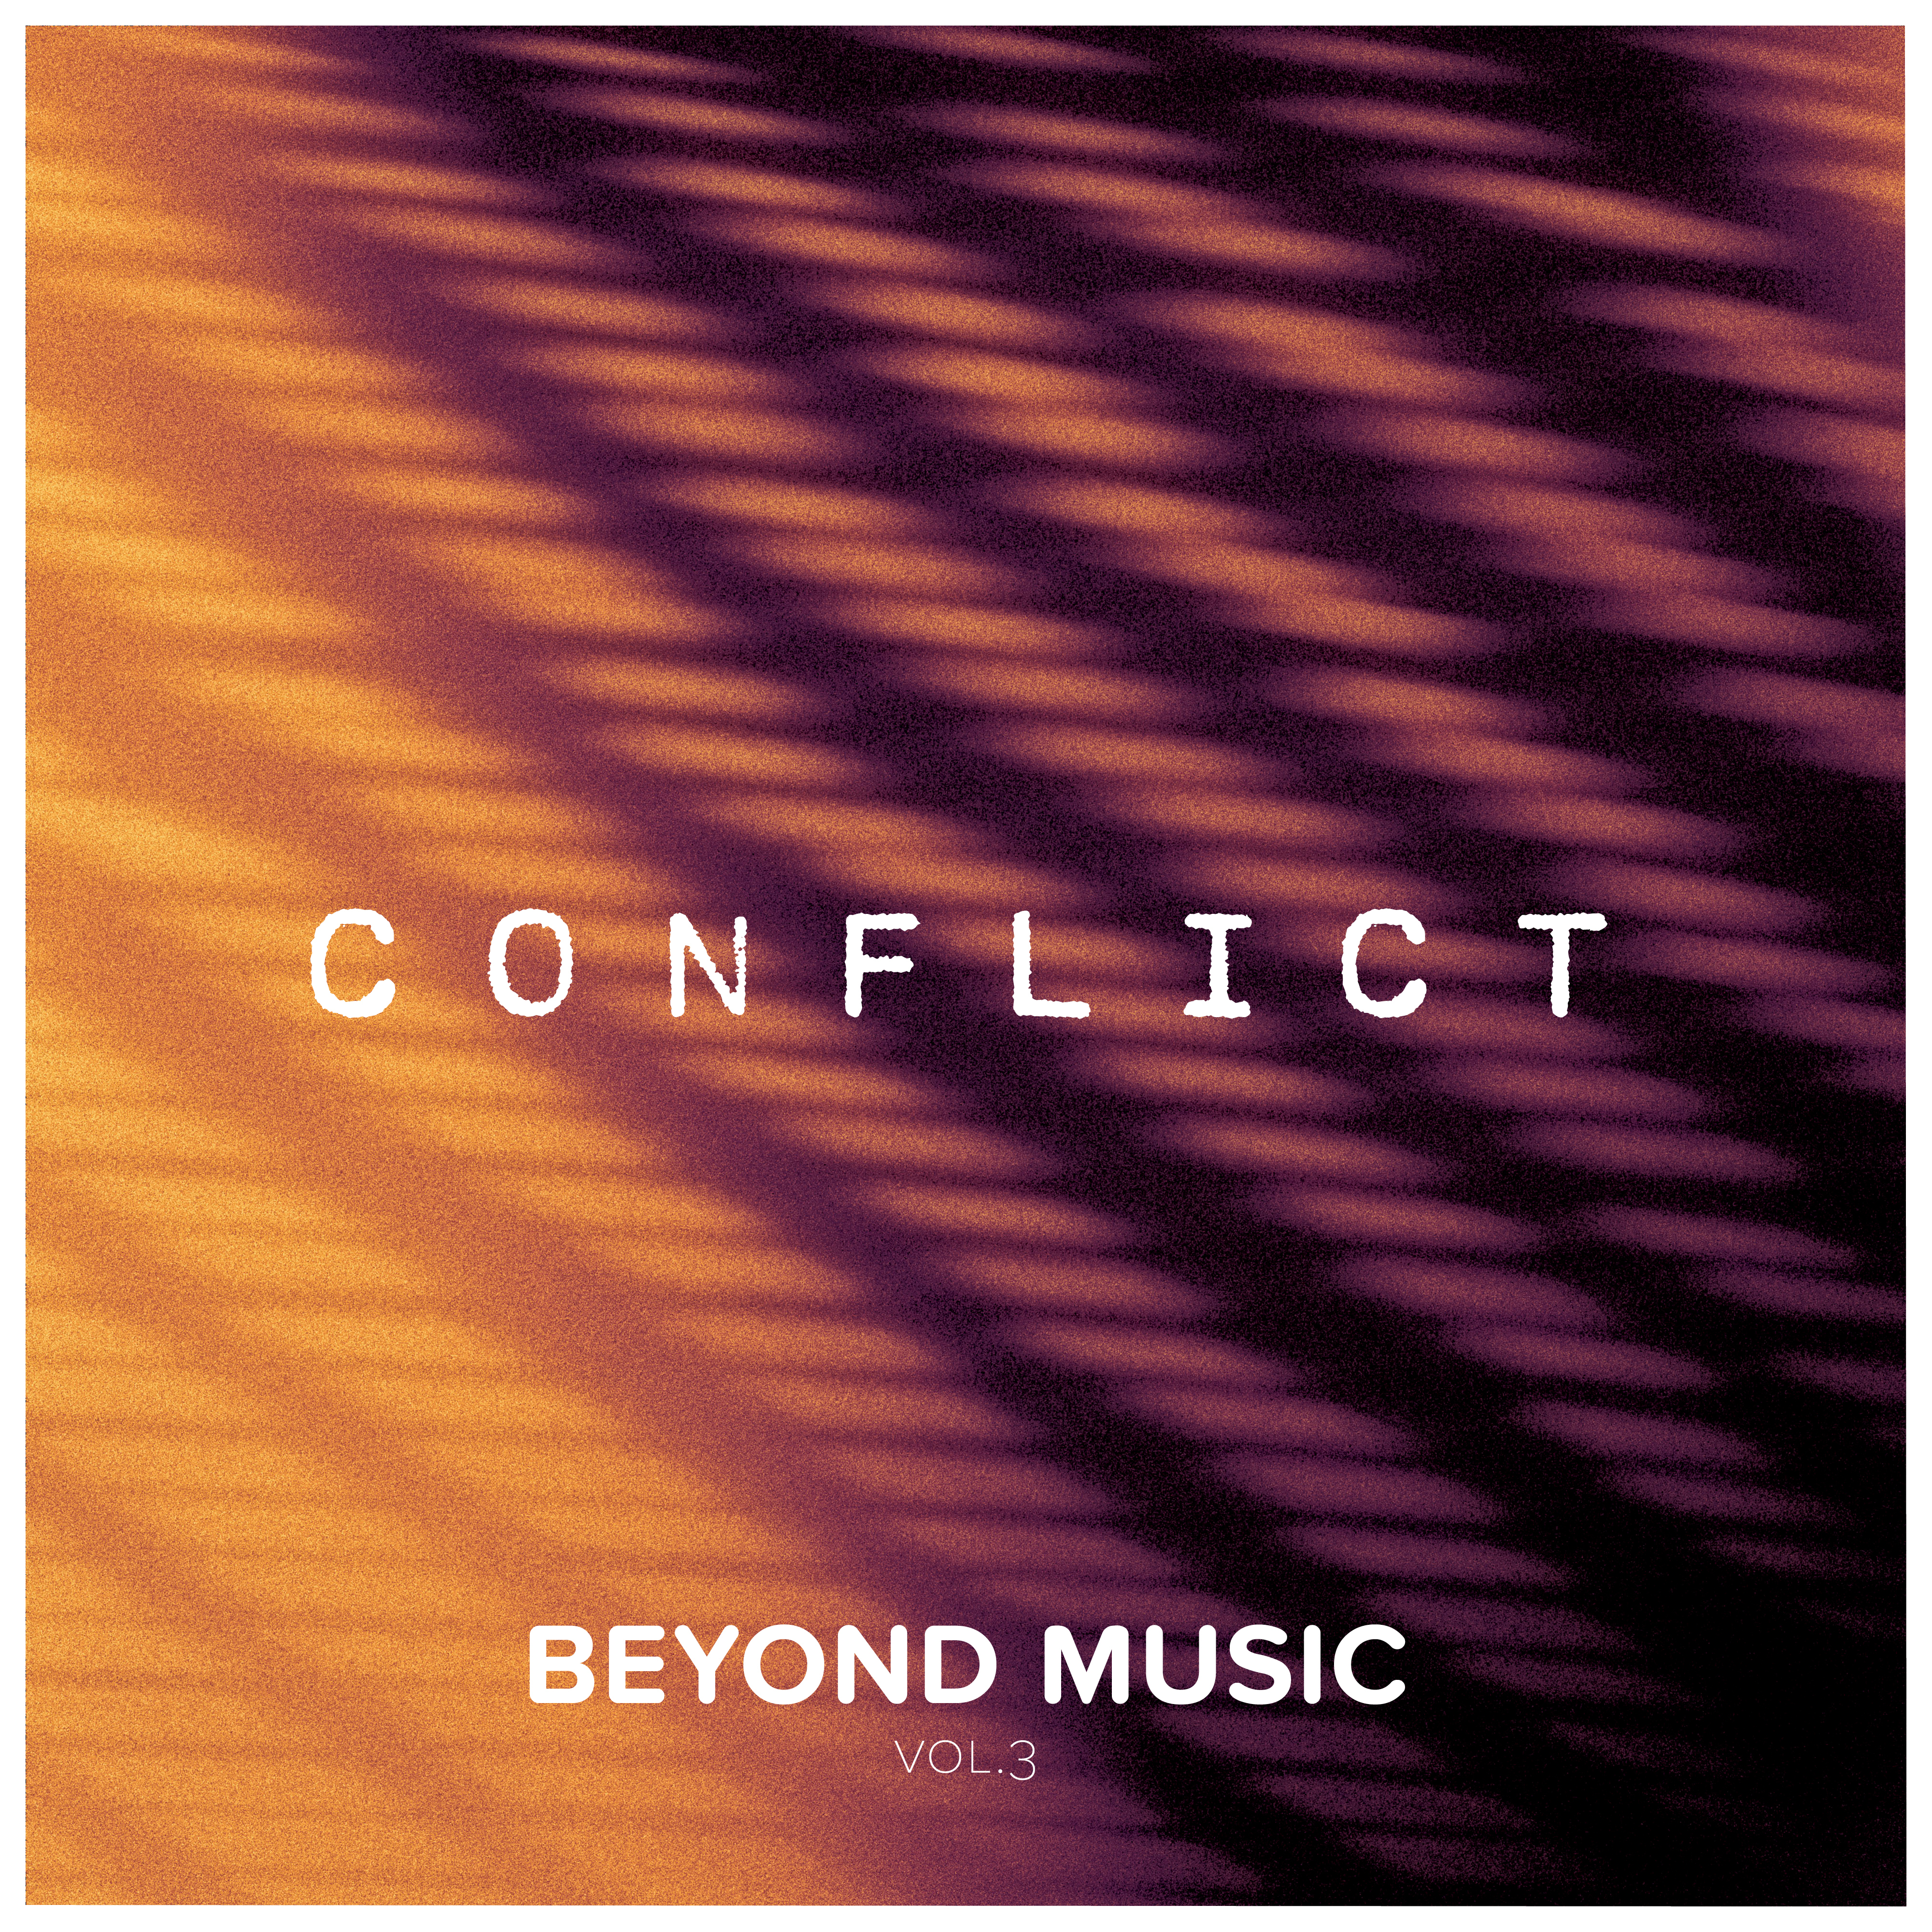 Beyond Music Vol.3 CONFLICT, album cover